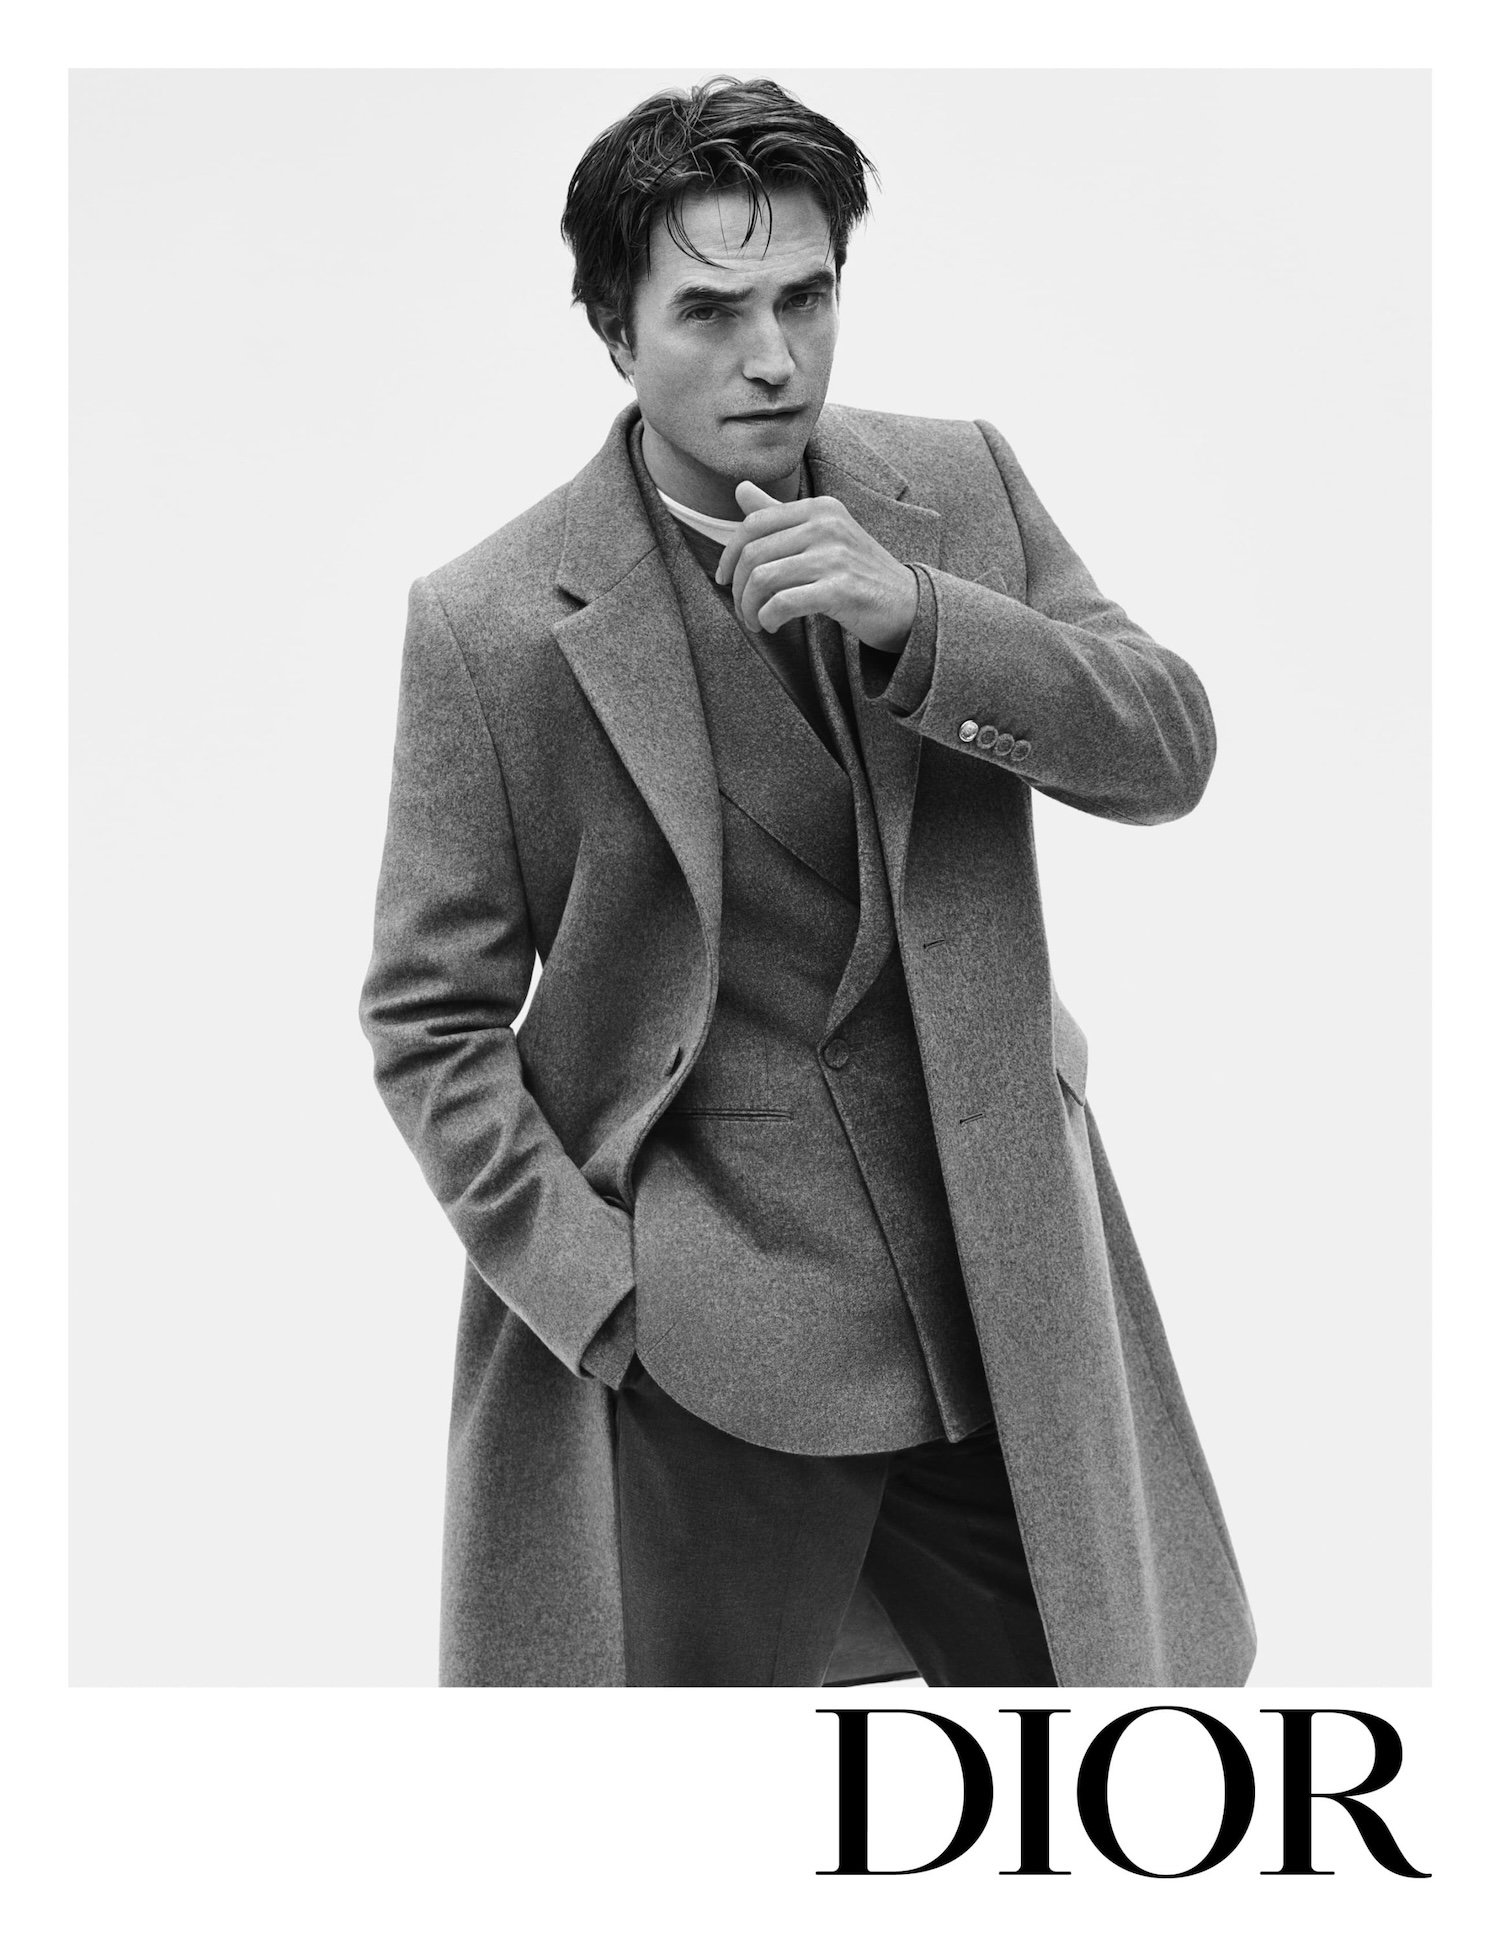 Dior-Men-Icons-Robert-Pattinson-by-Alasdair-McLellan-2.jpg